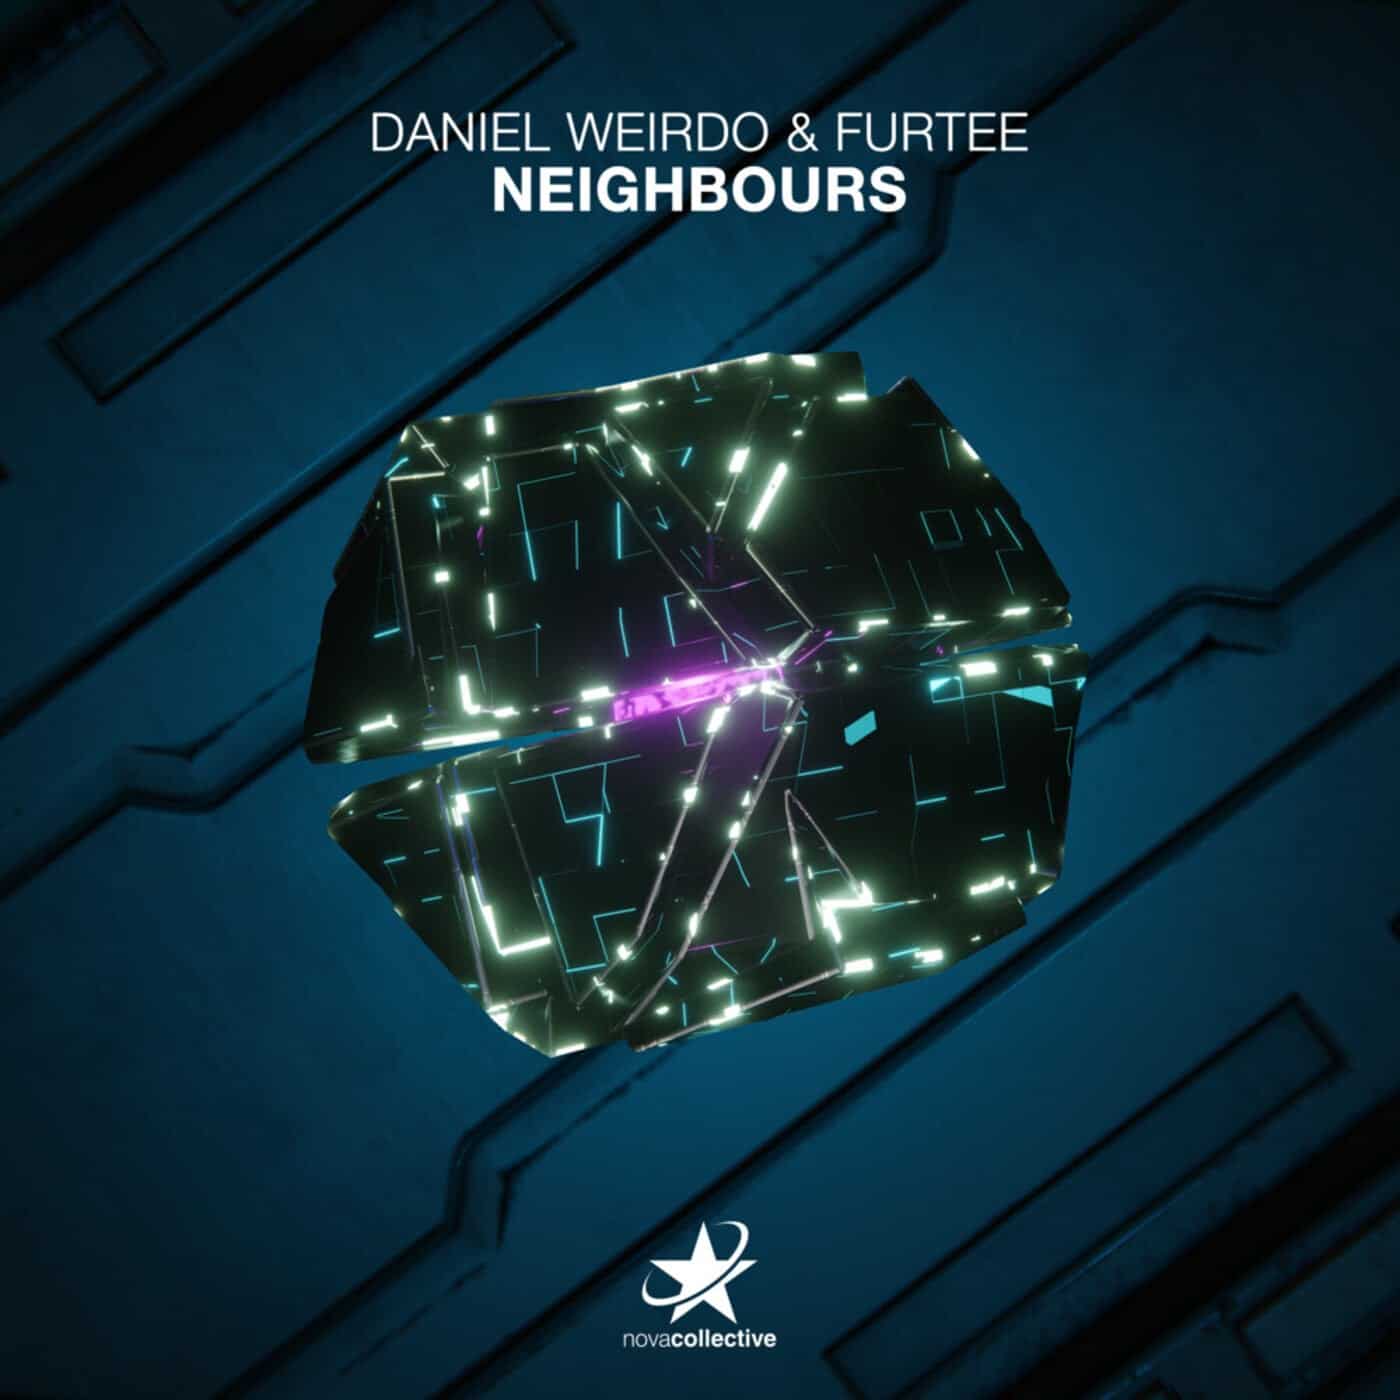 image cover: Furtee, Daniel Weirdo - Neighbours on Nova Collective